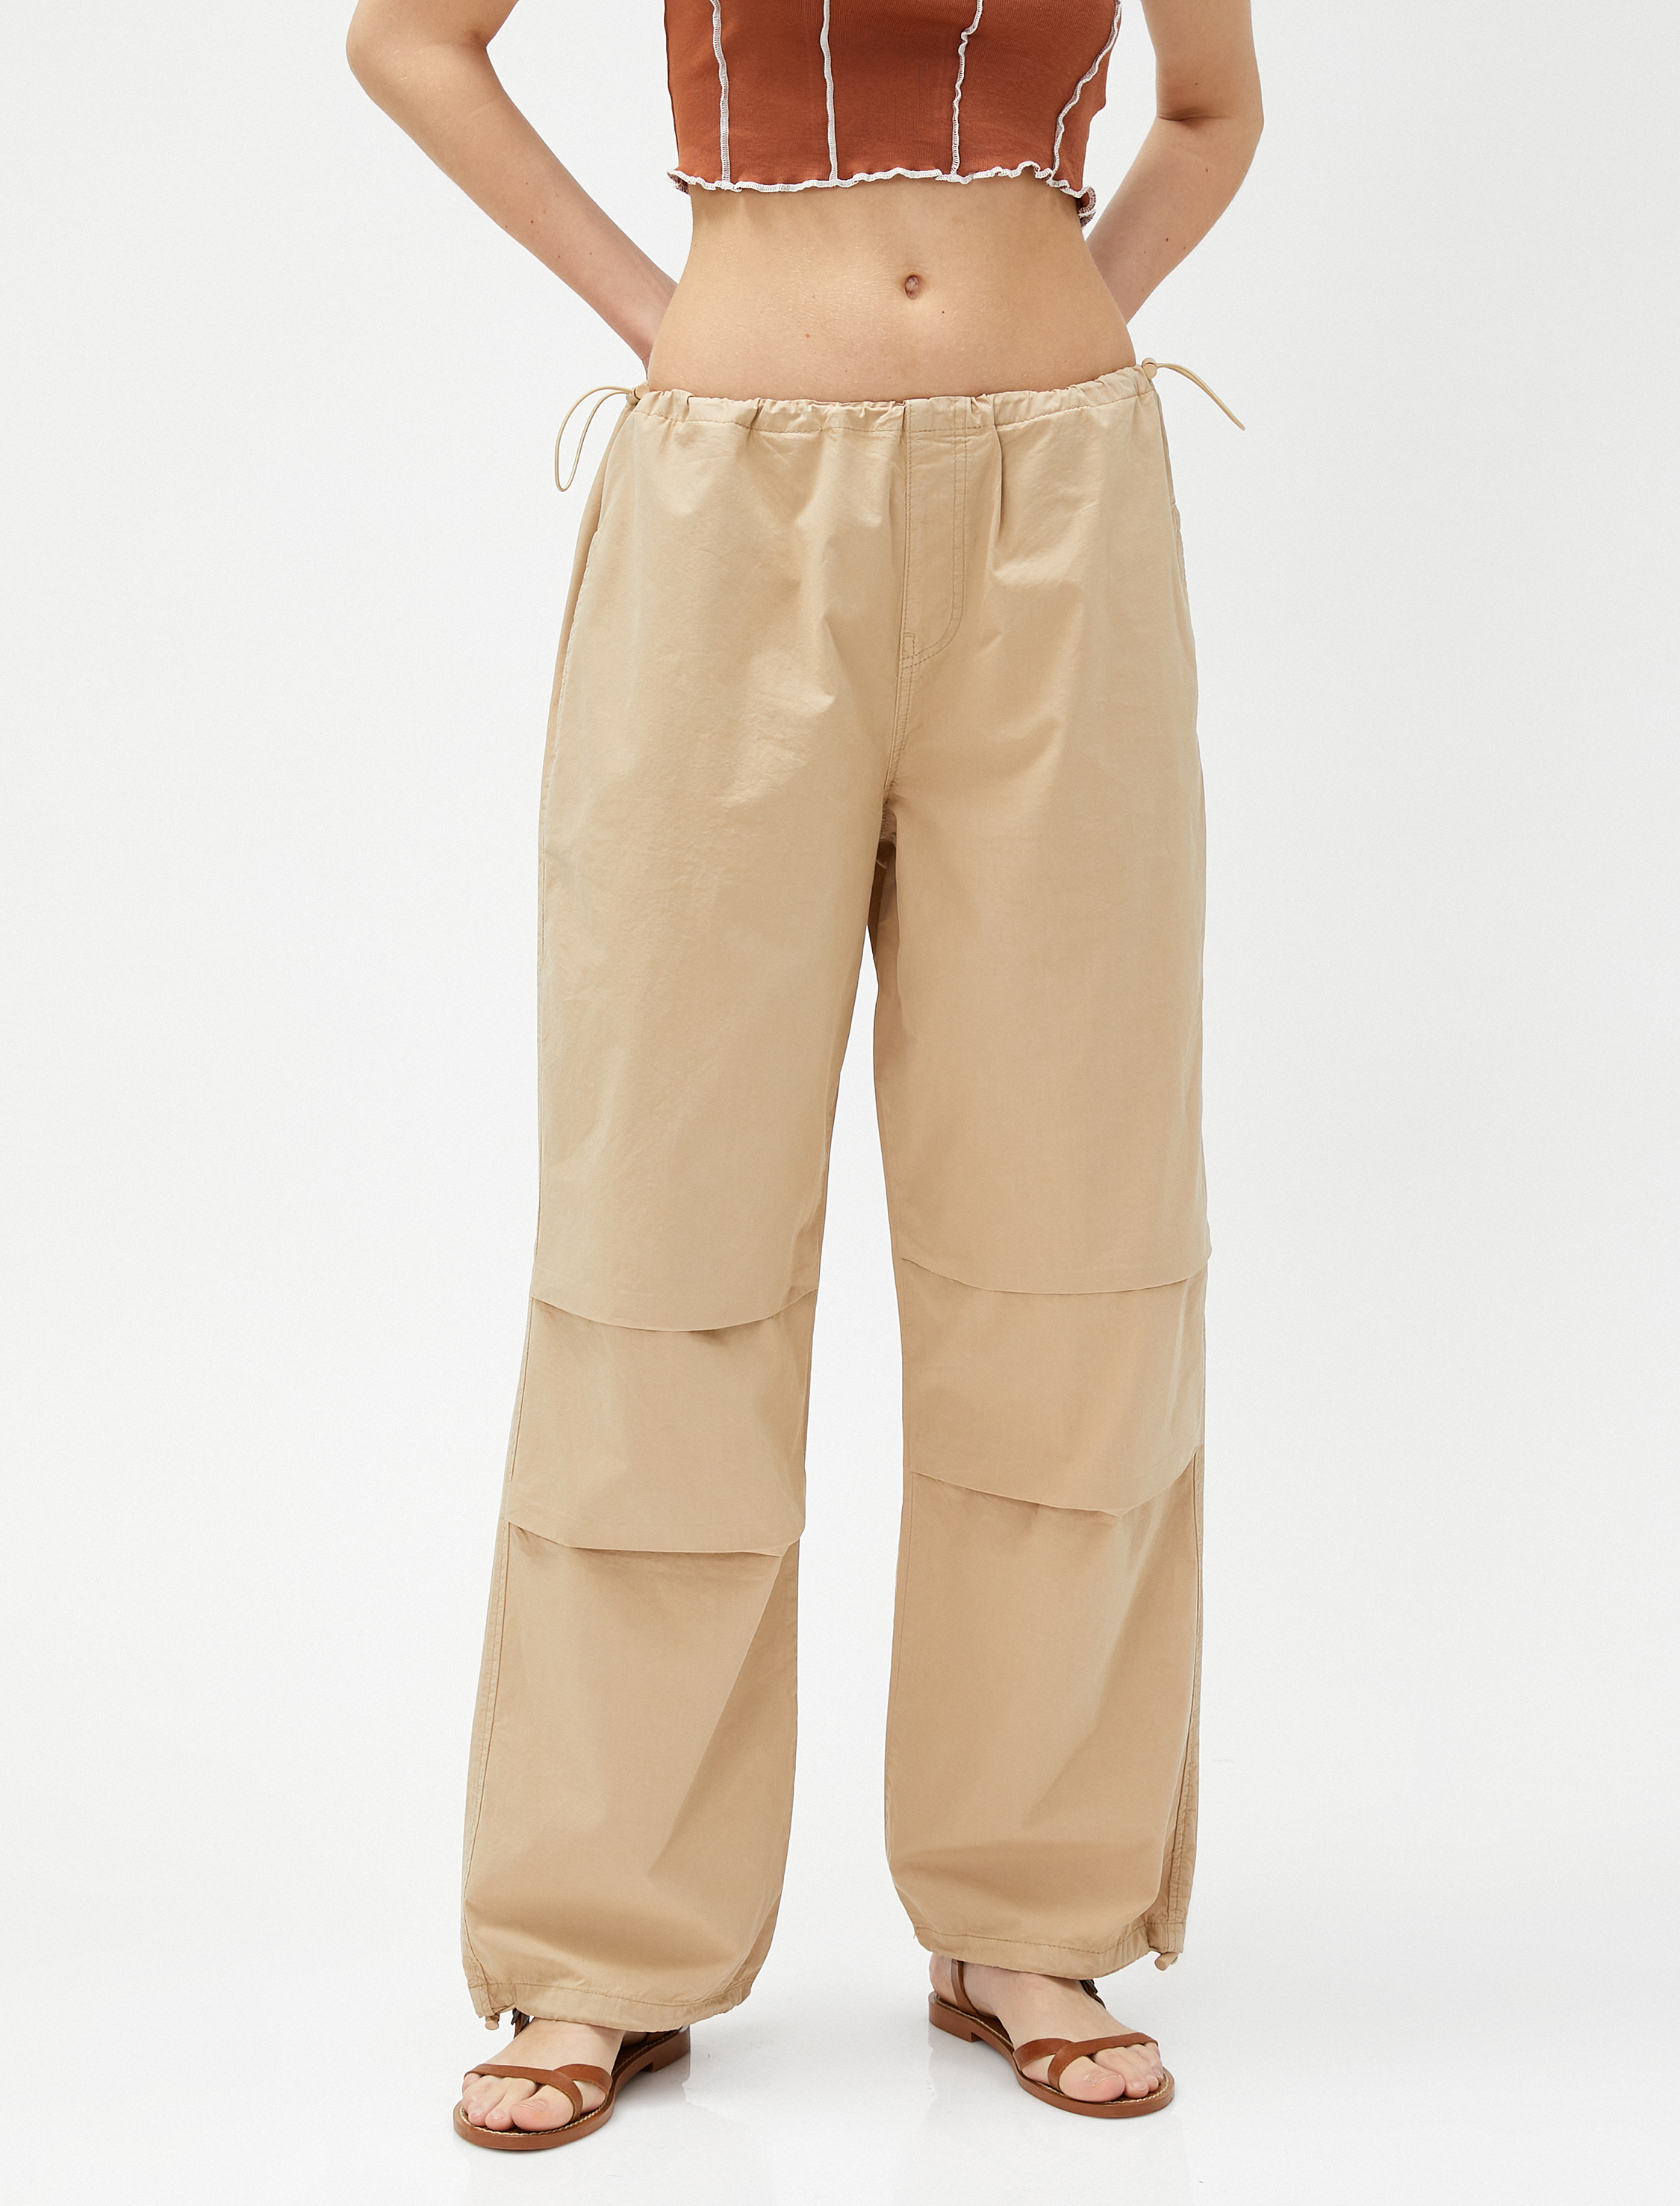 Koton Paraşüt Pantolon Cep Detaylı Beli ve Paçası Lastikli. 3